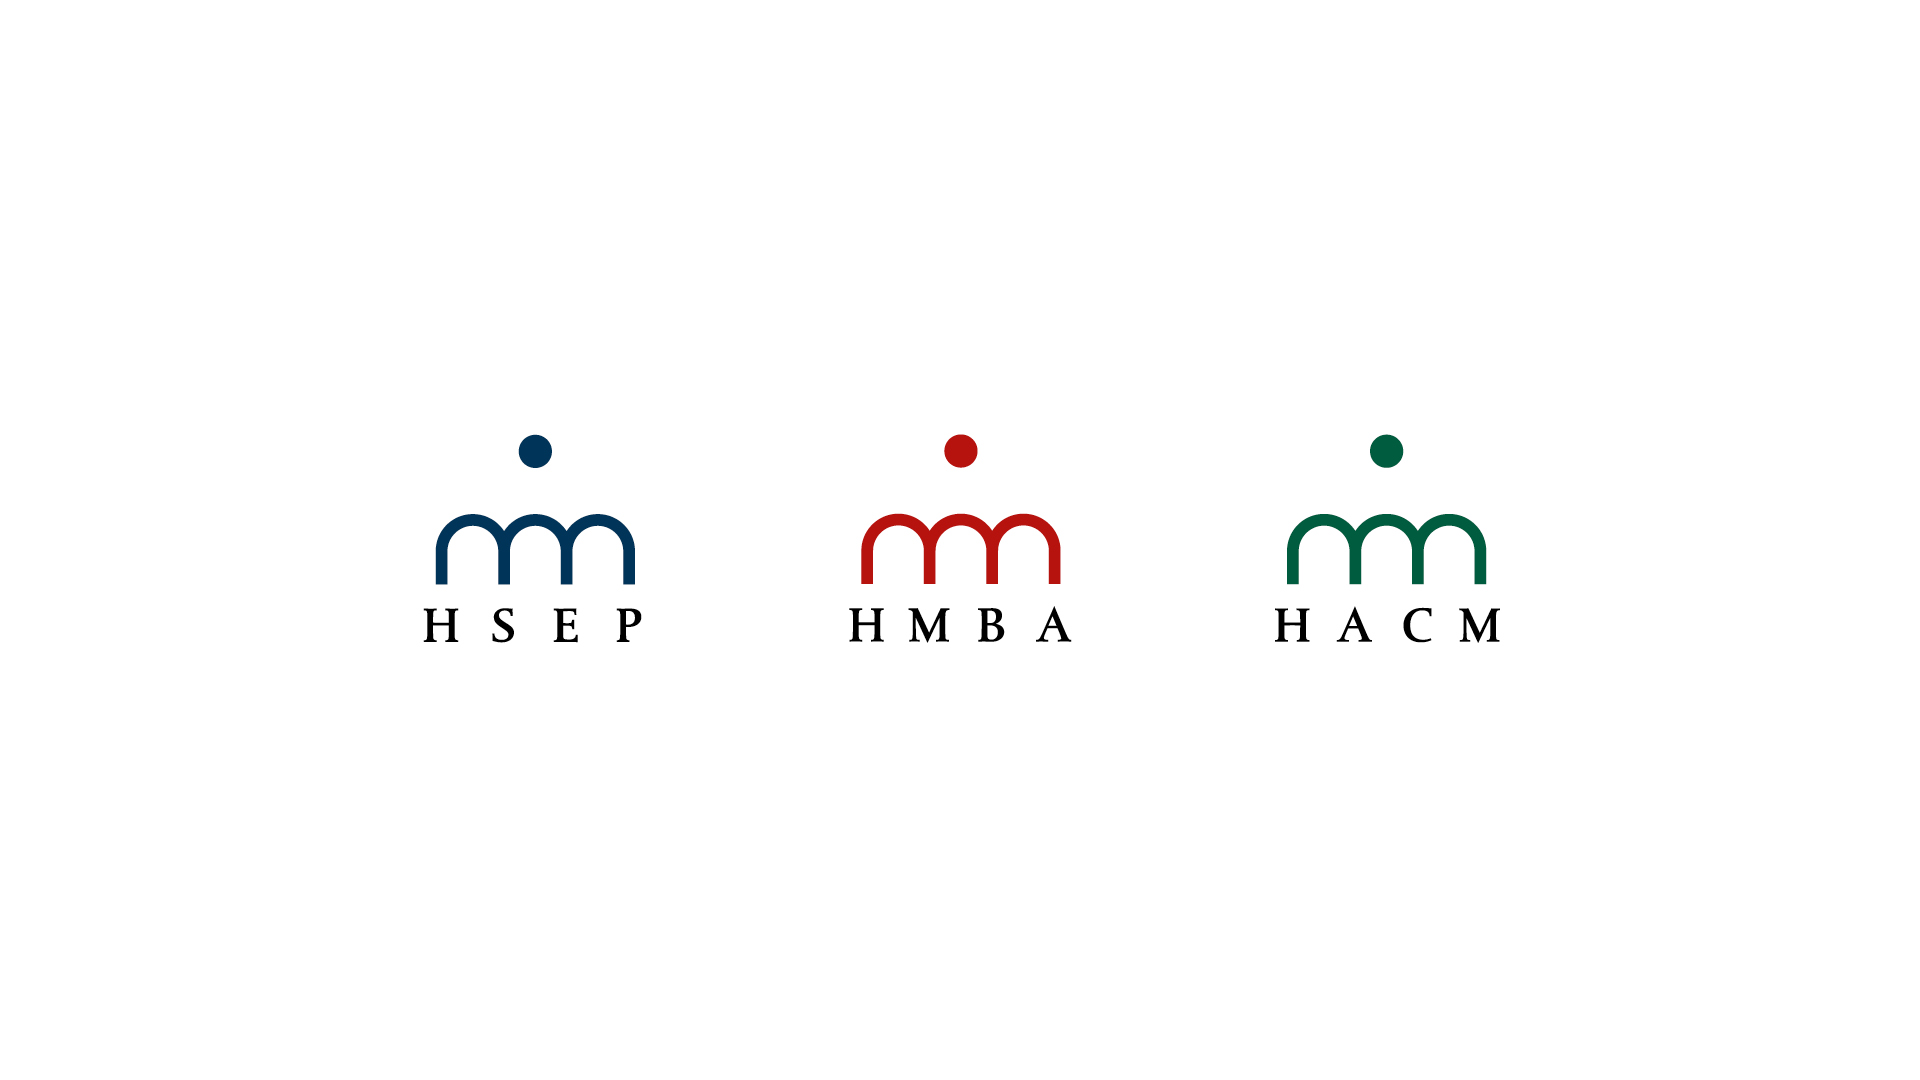 HSEP/HMBA/HACM's Symbol Logos